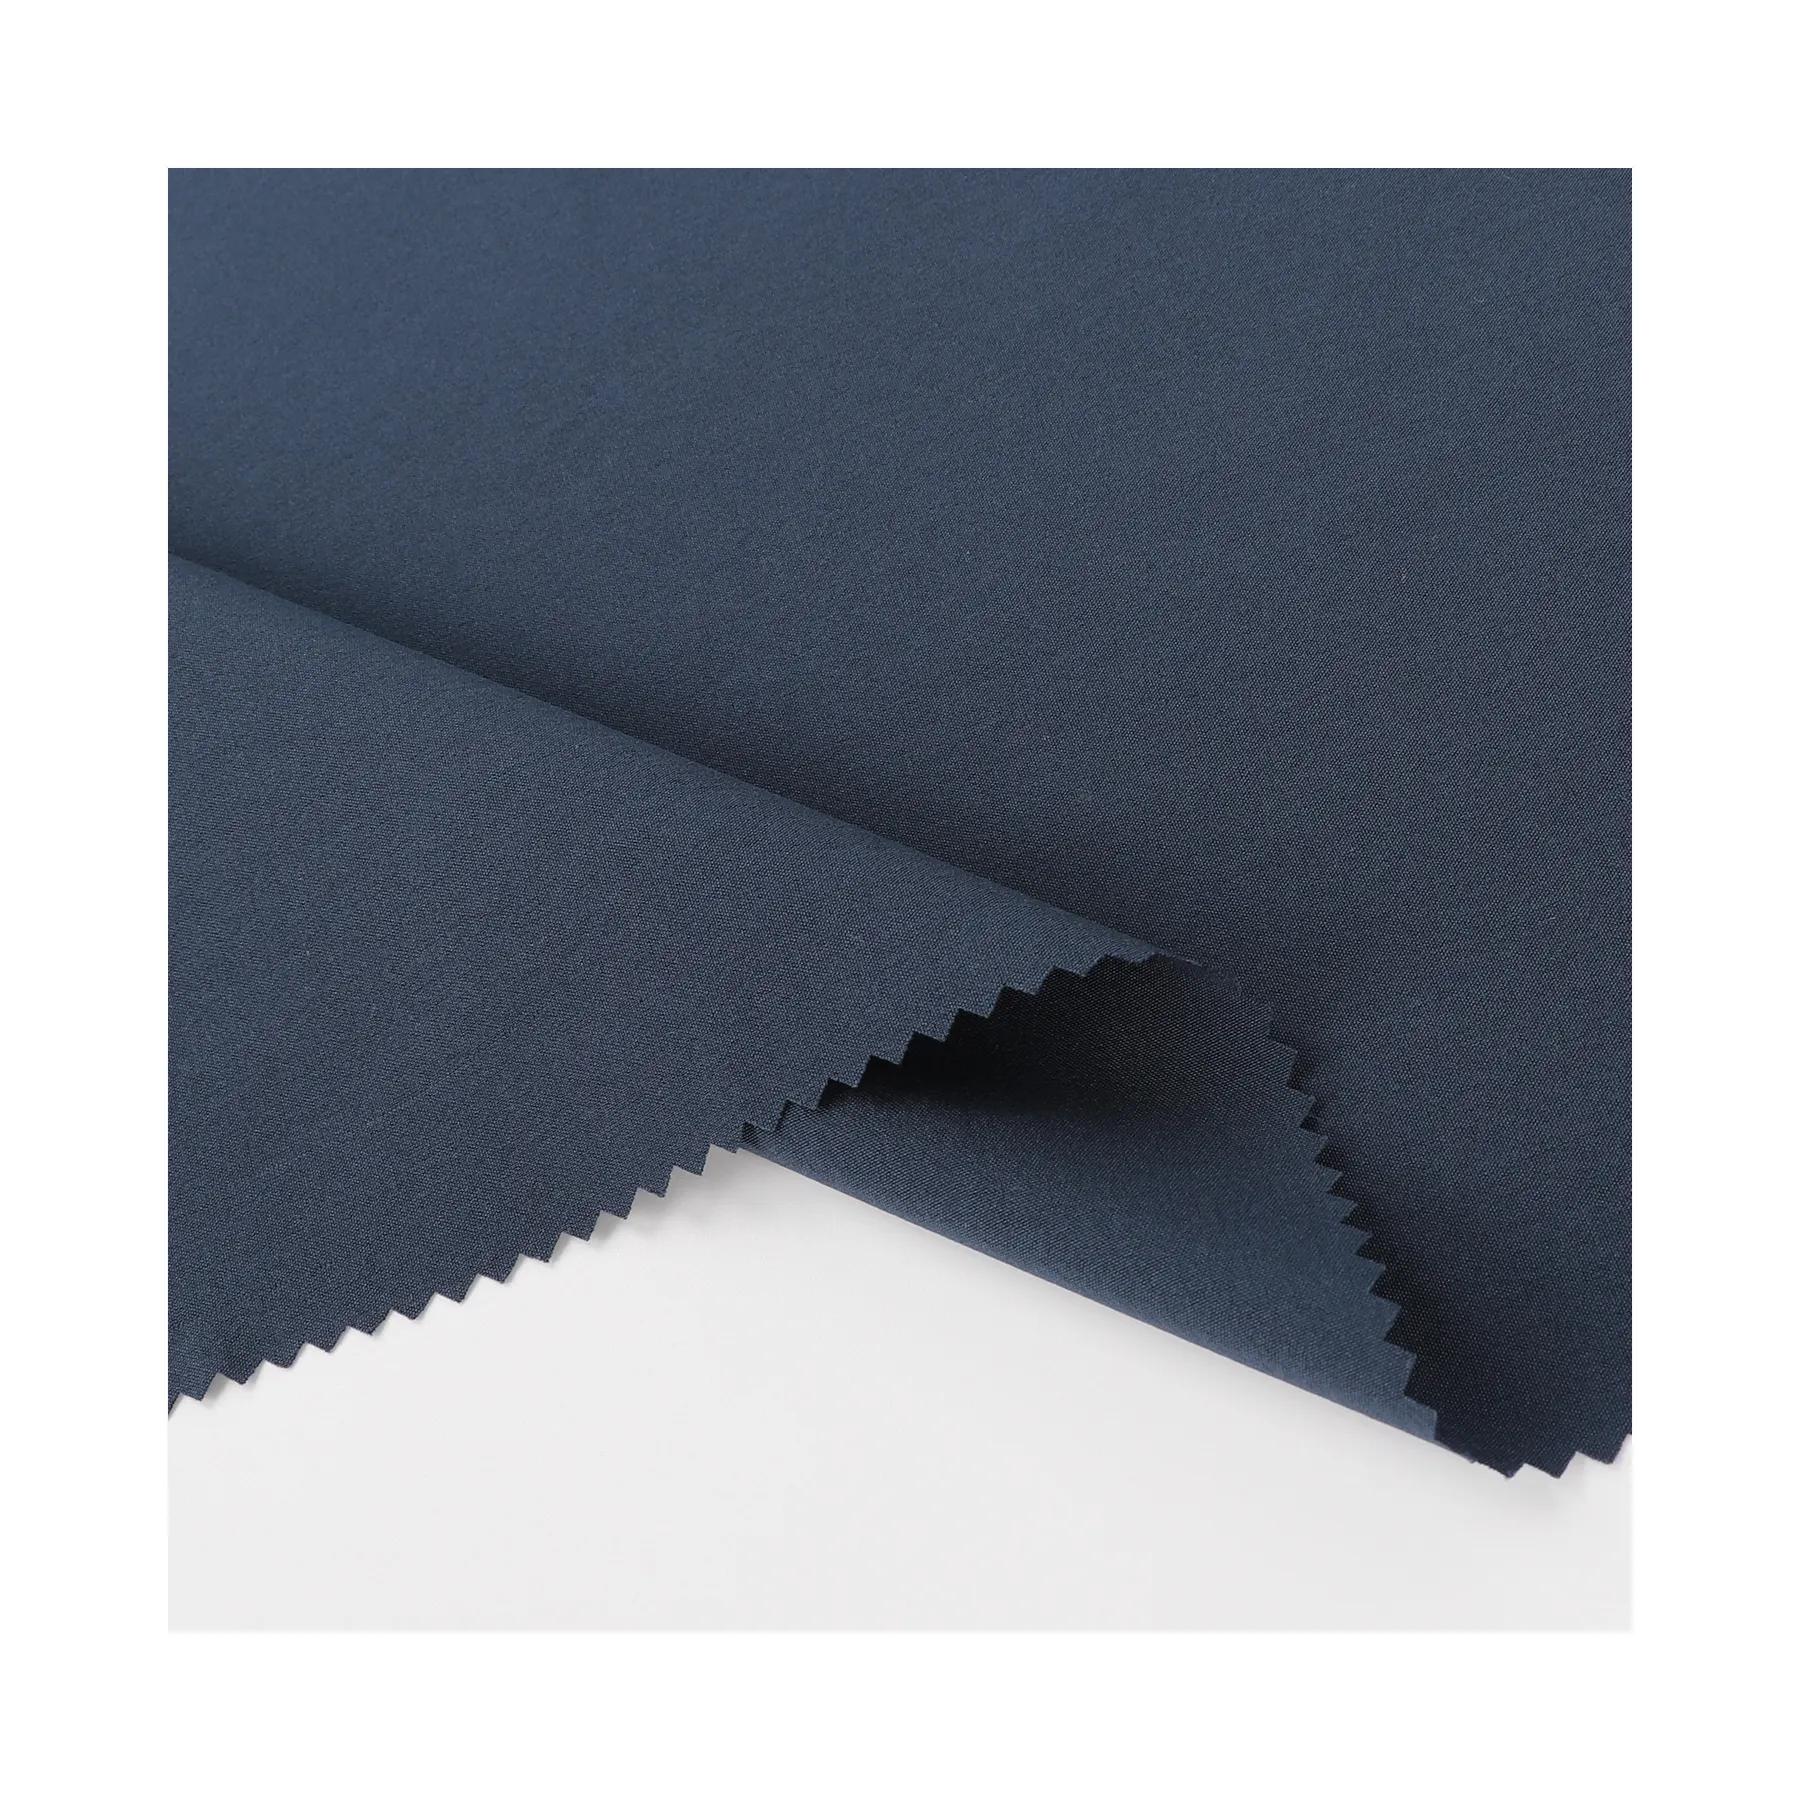 4 способа, эластичная сухая мягкая легкая полиэфирная однотонная ткань для пальто для брюк, дышащая удобная Антибактериальная ткань